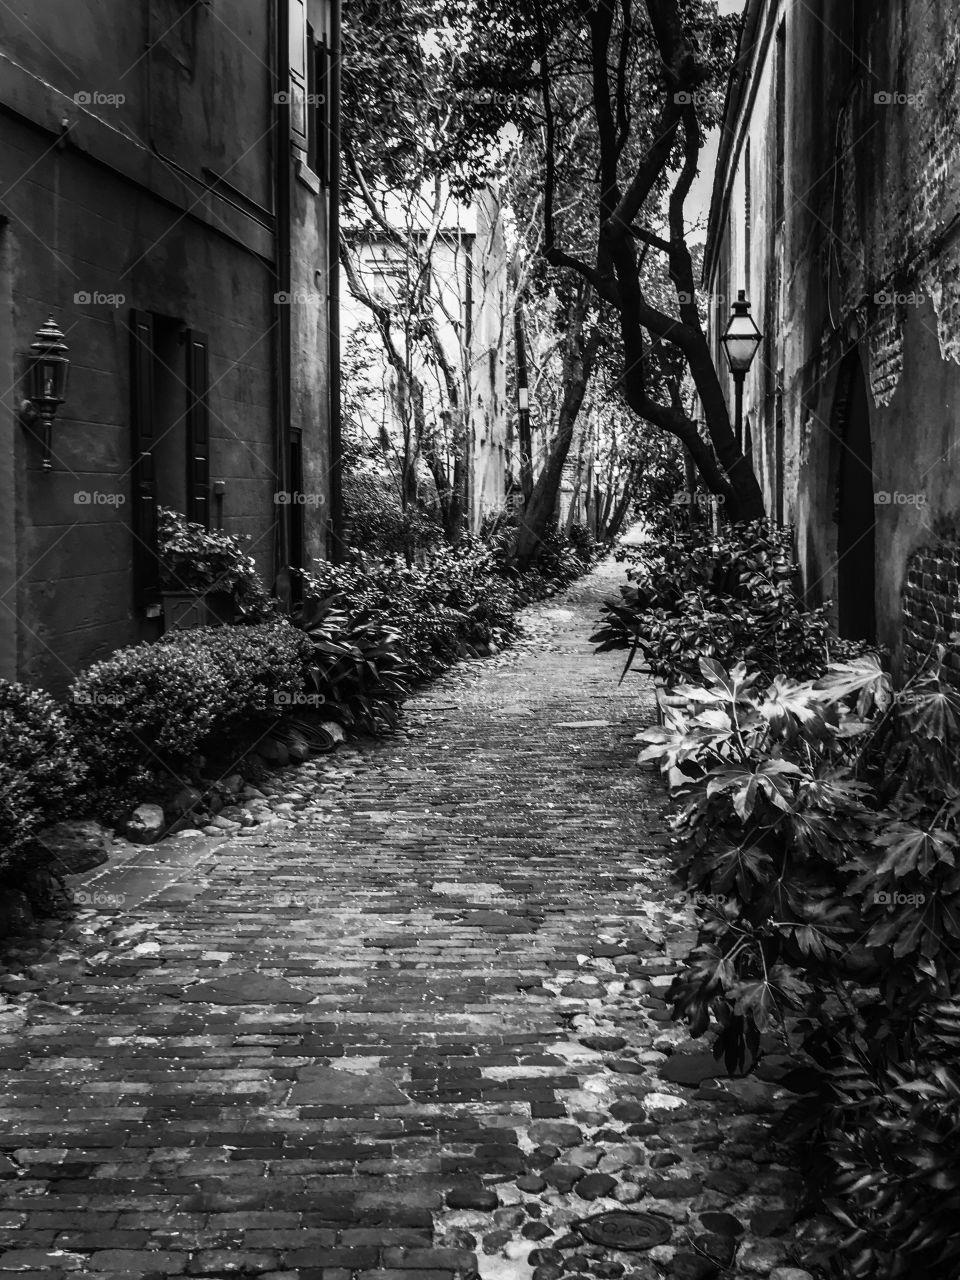 Charleston Alleyway - Black and White